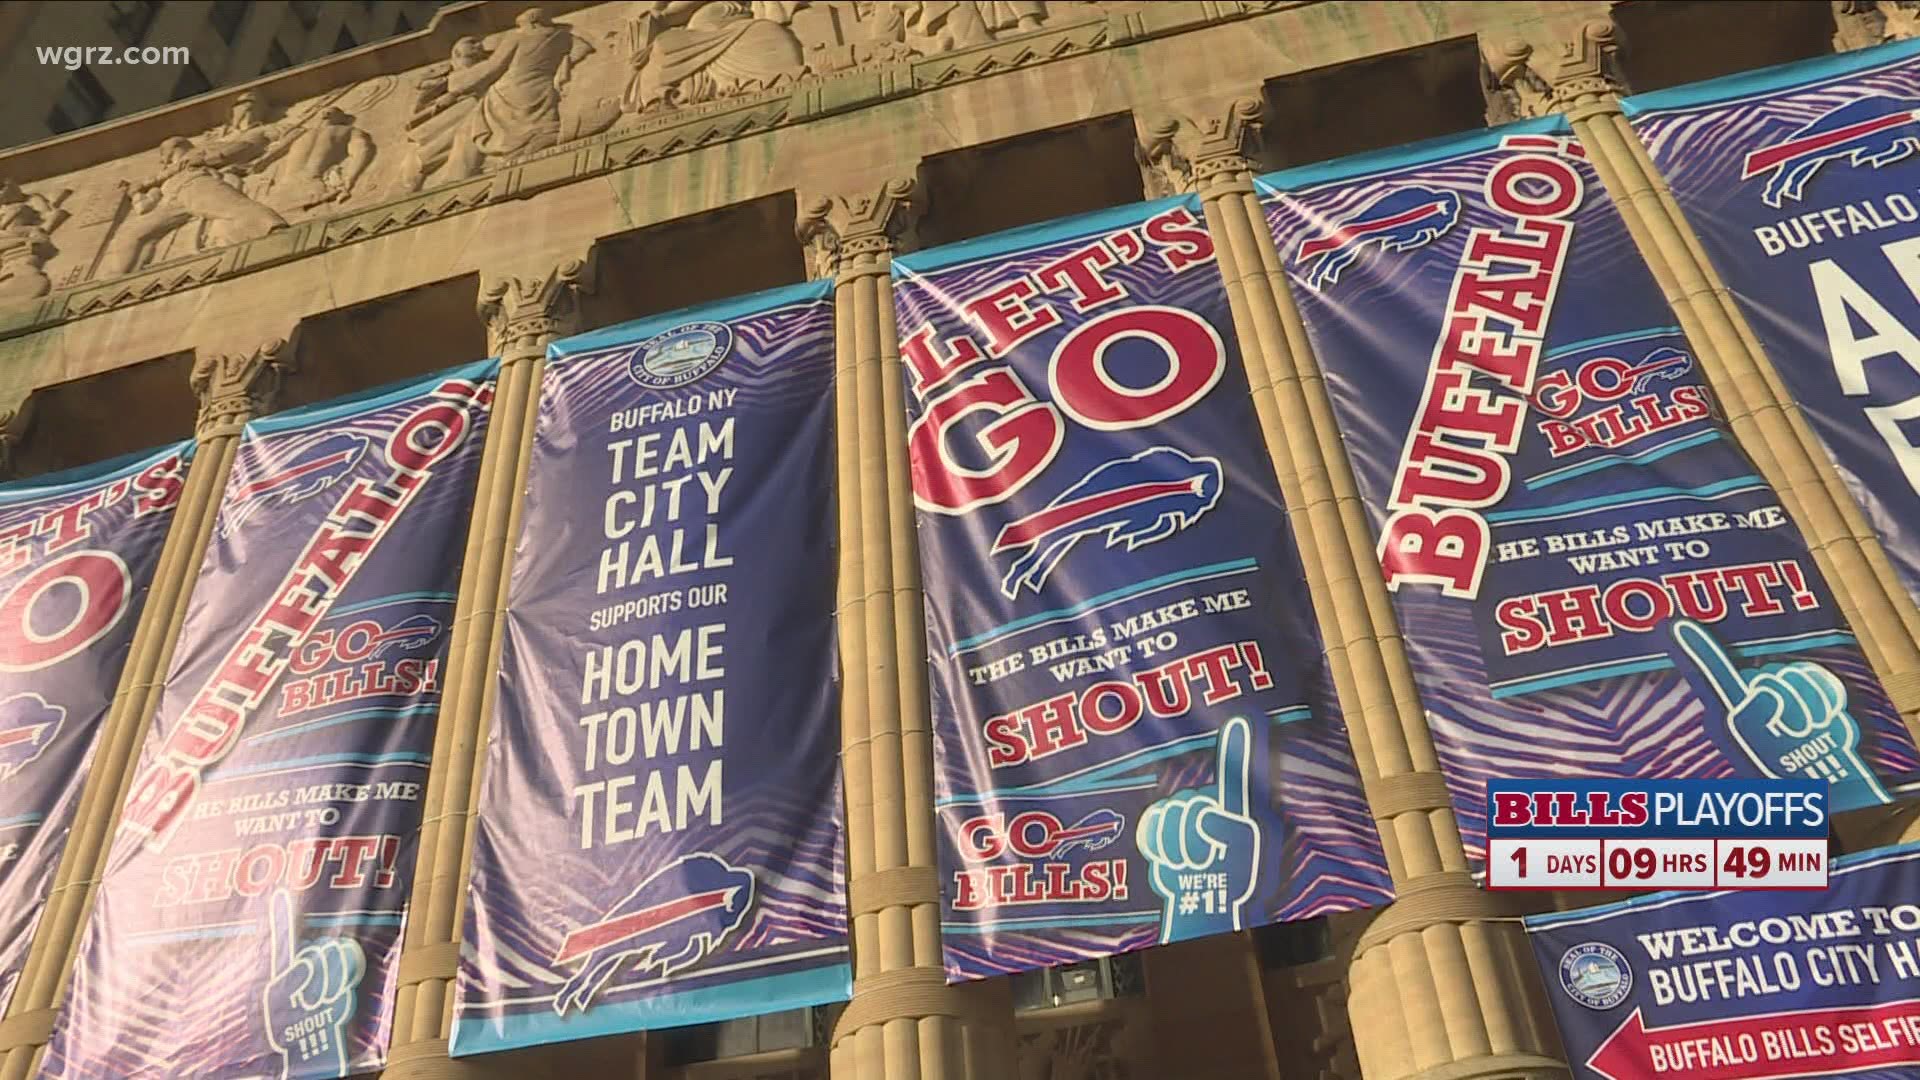 Downtown Buffalo showing off Bills pride